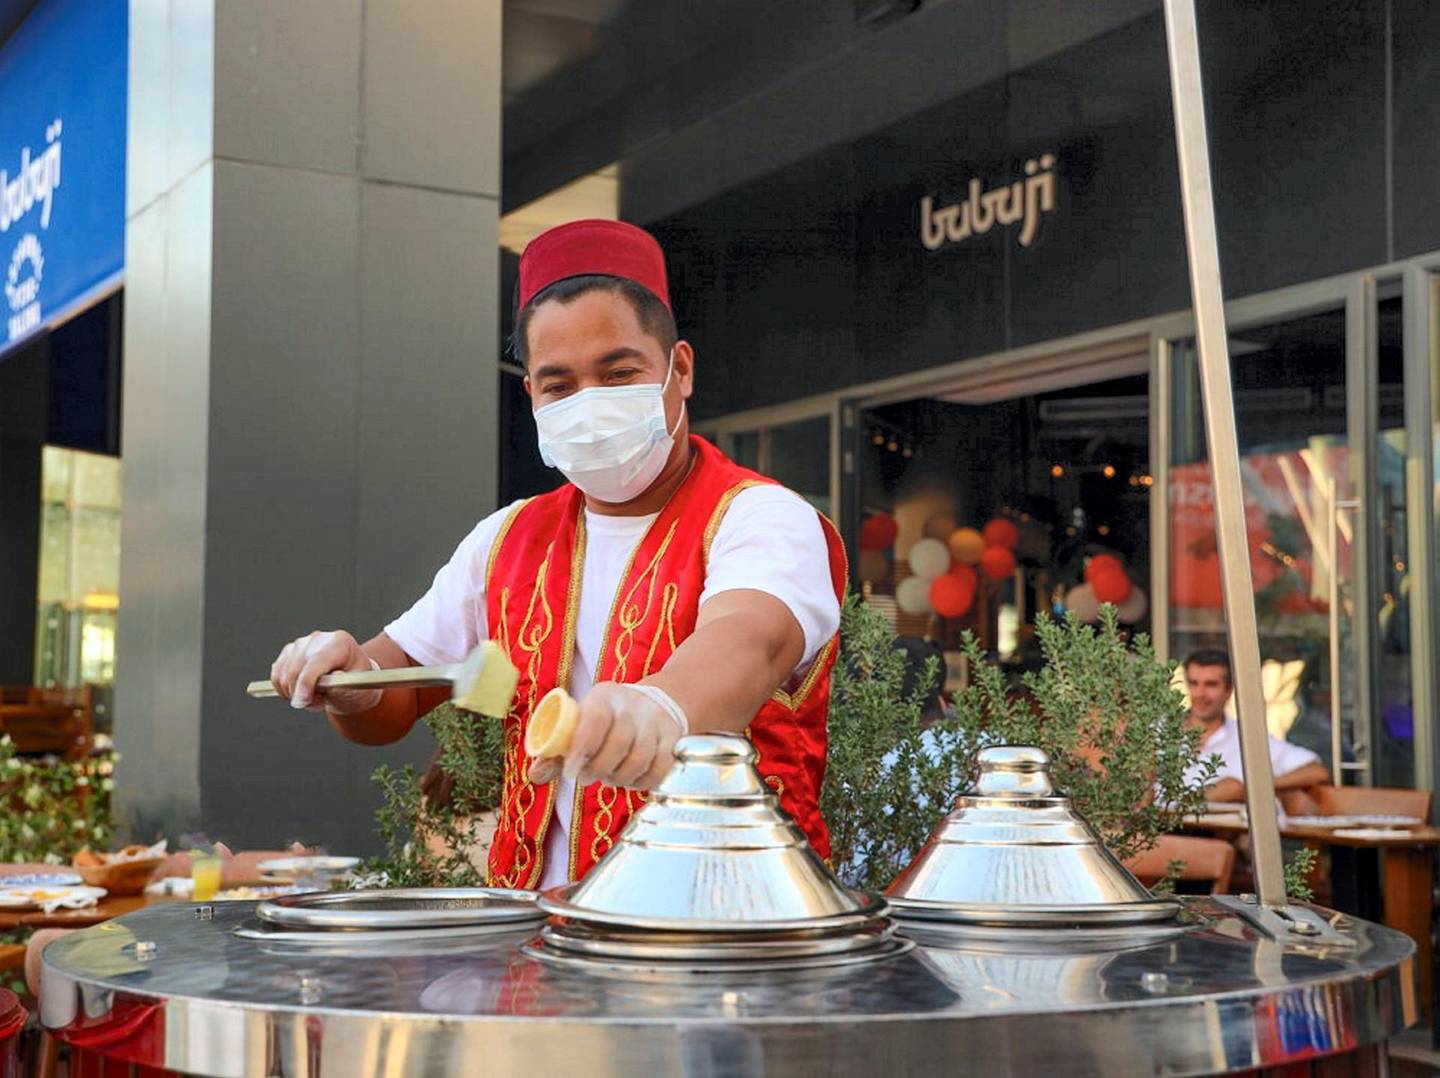 UAE residents can enjoy a Turkish bazaar pop-up at City Walk